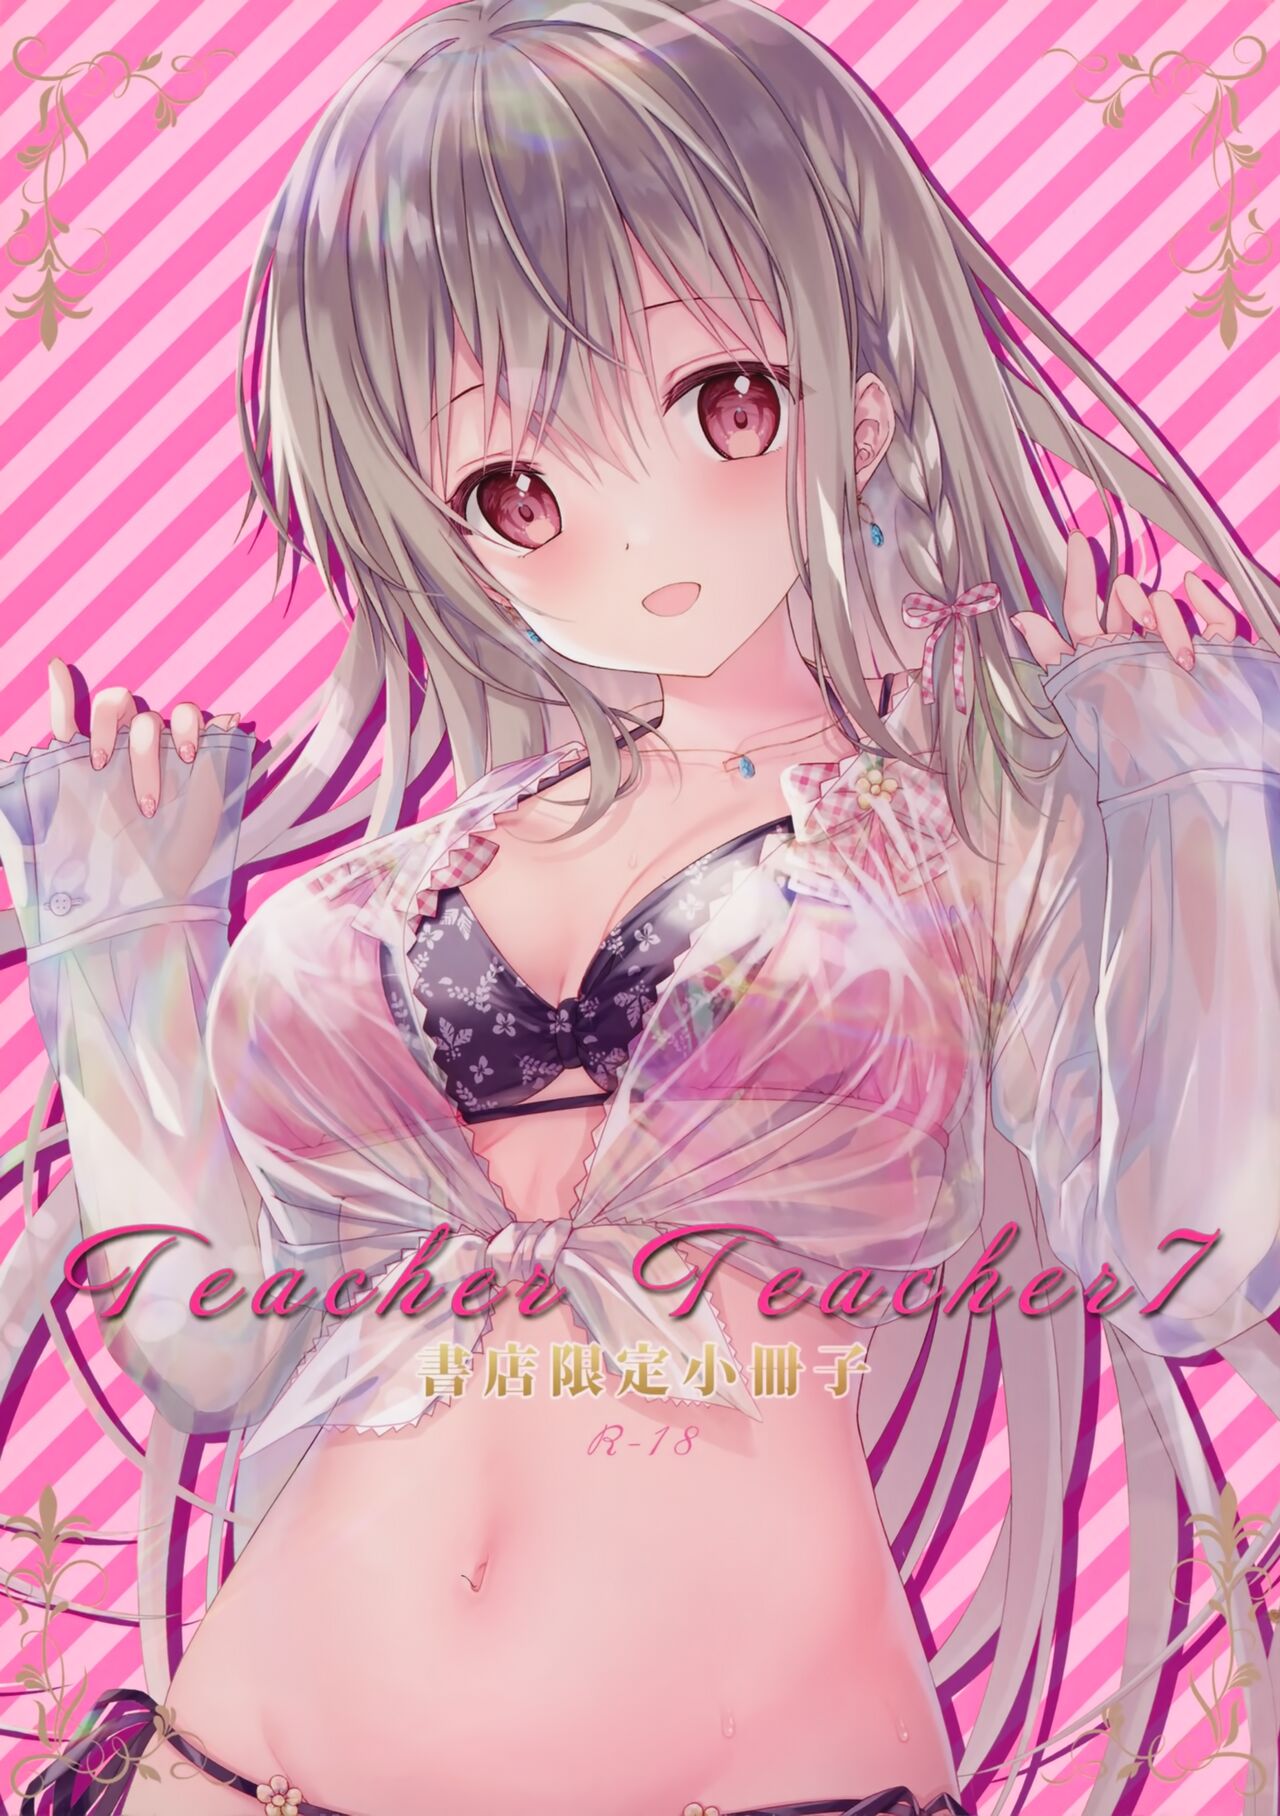 (C99) [TwinBox (花花捲、草草饅)] TeacherTeacher7